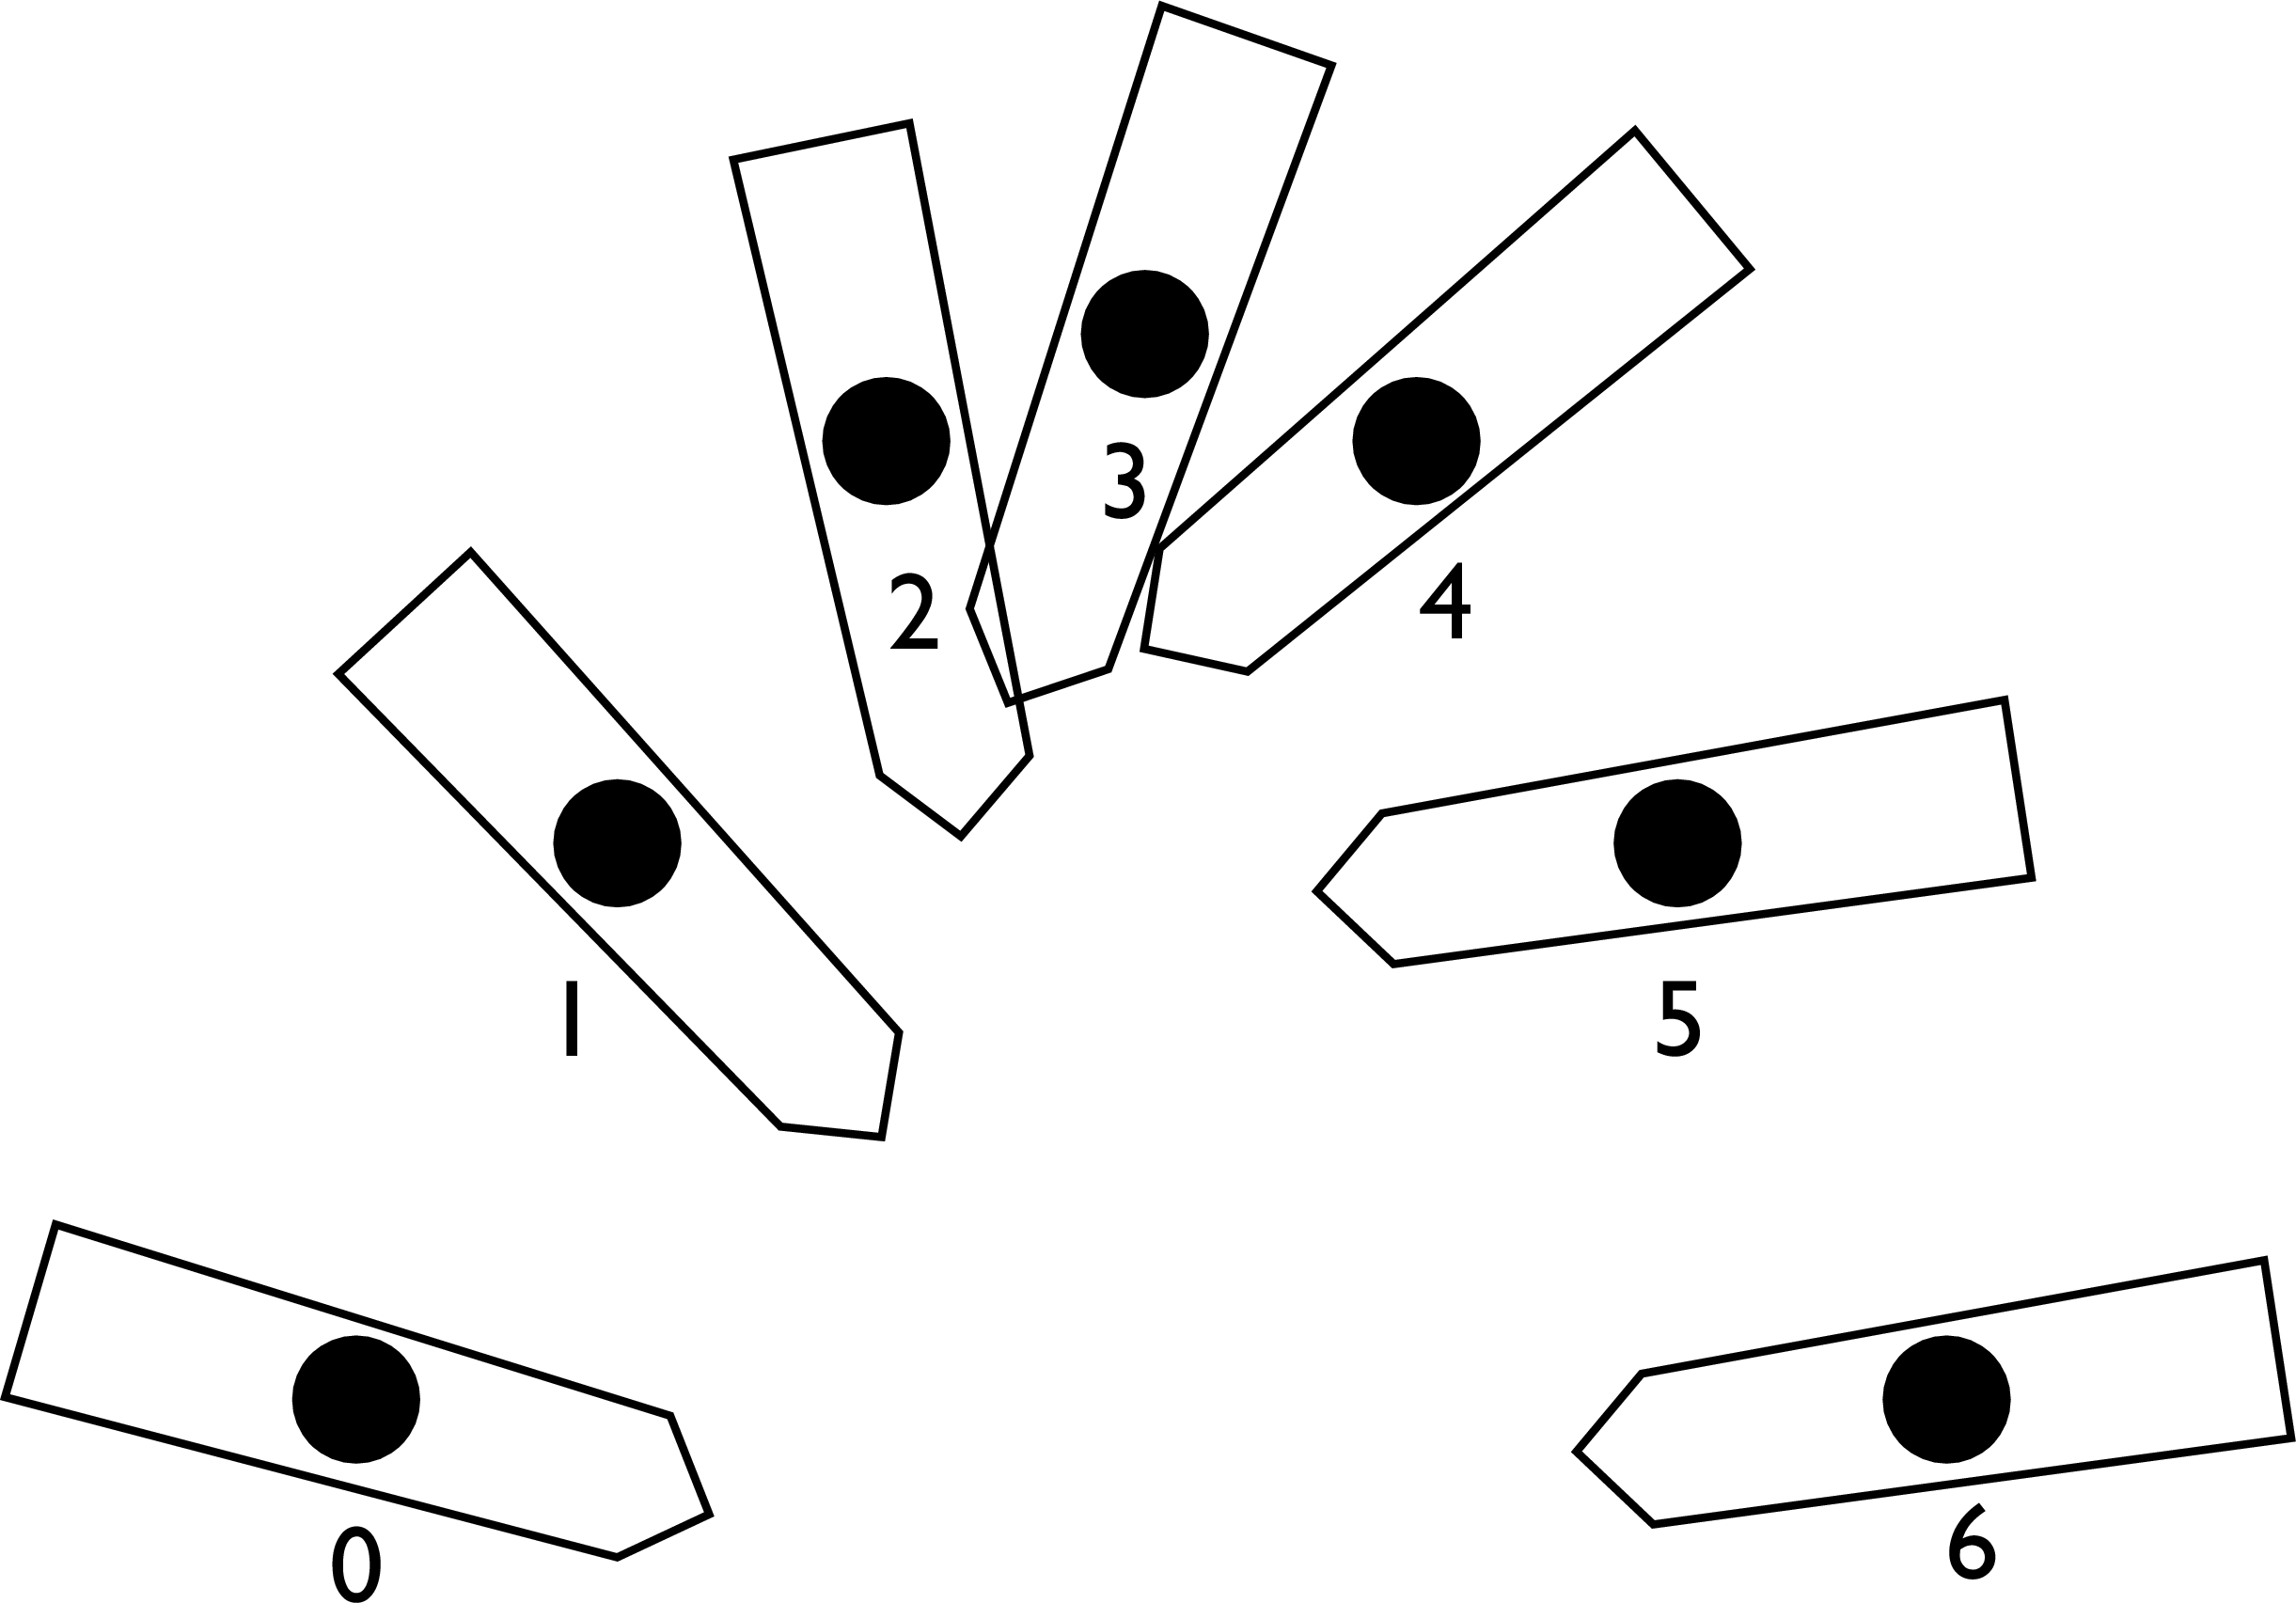 Motion diagram of a rotating pencil as it flies through the air.